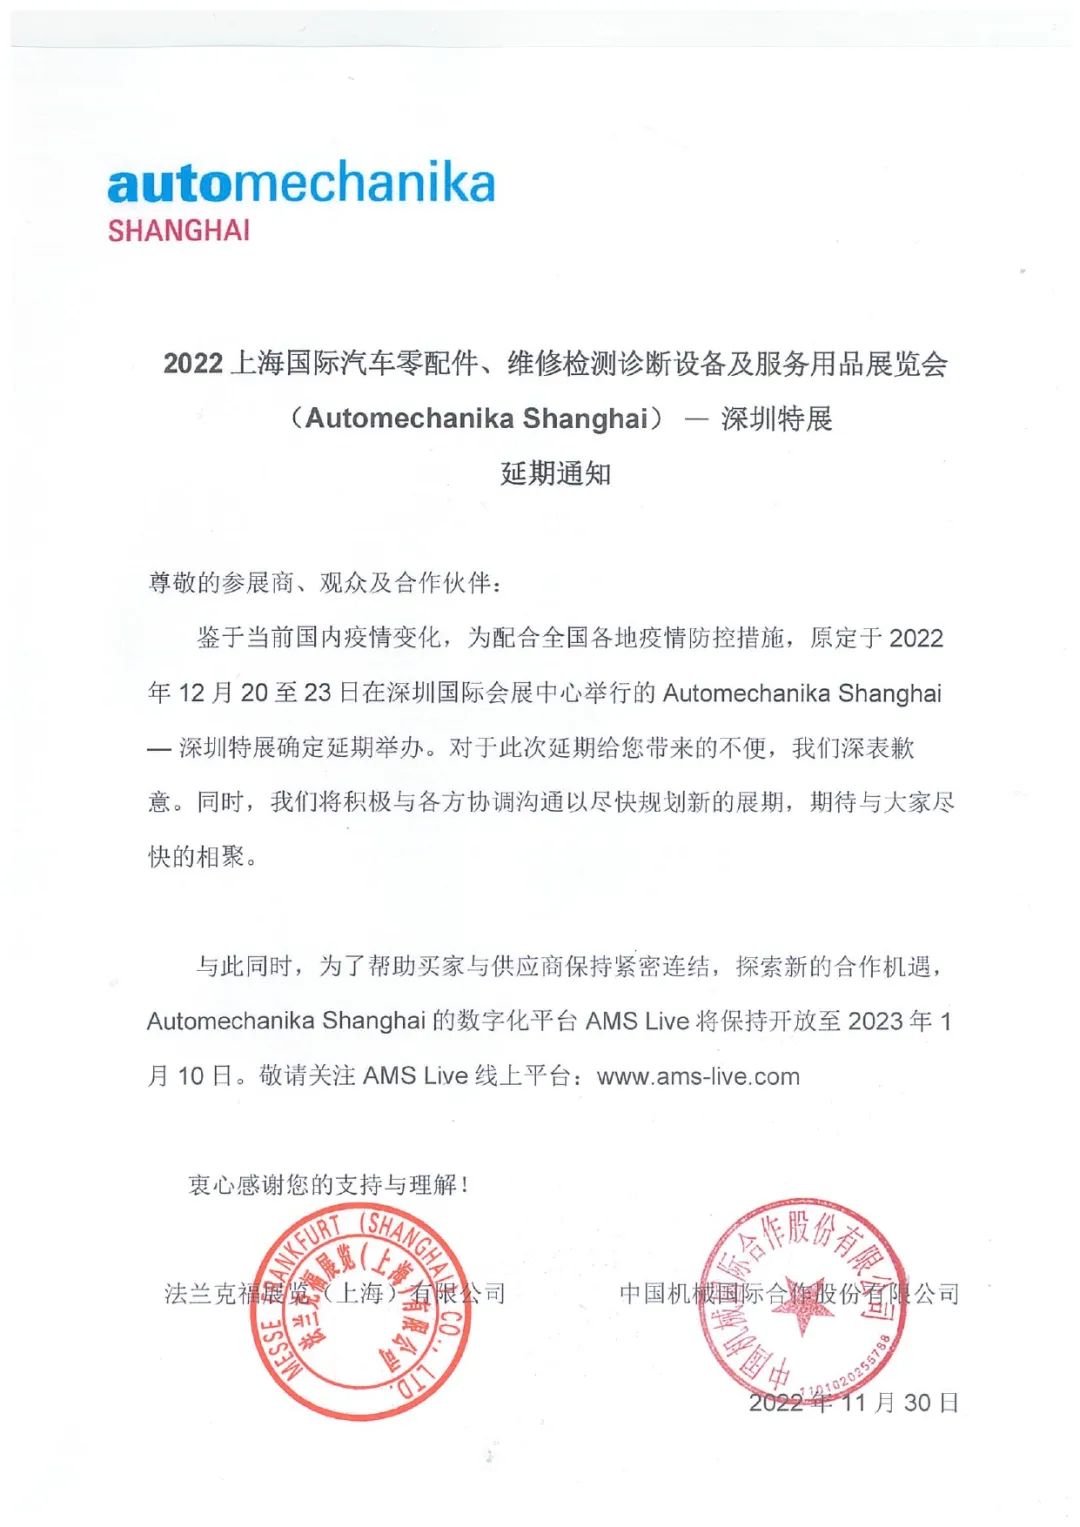 【通知】2022年Automechanika Shanghai延期举行